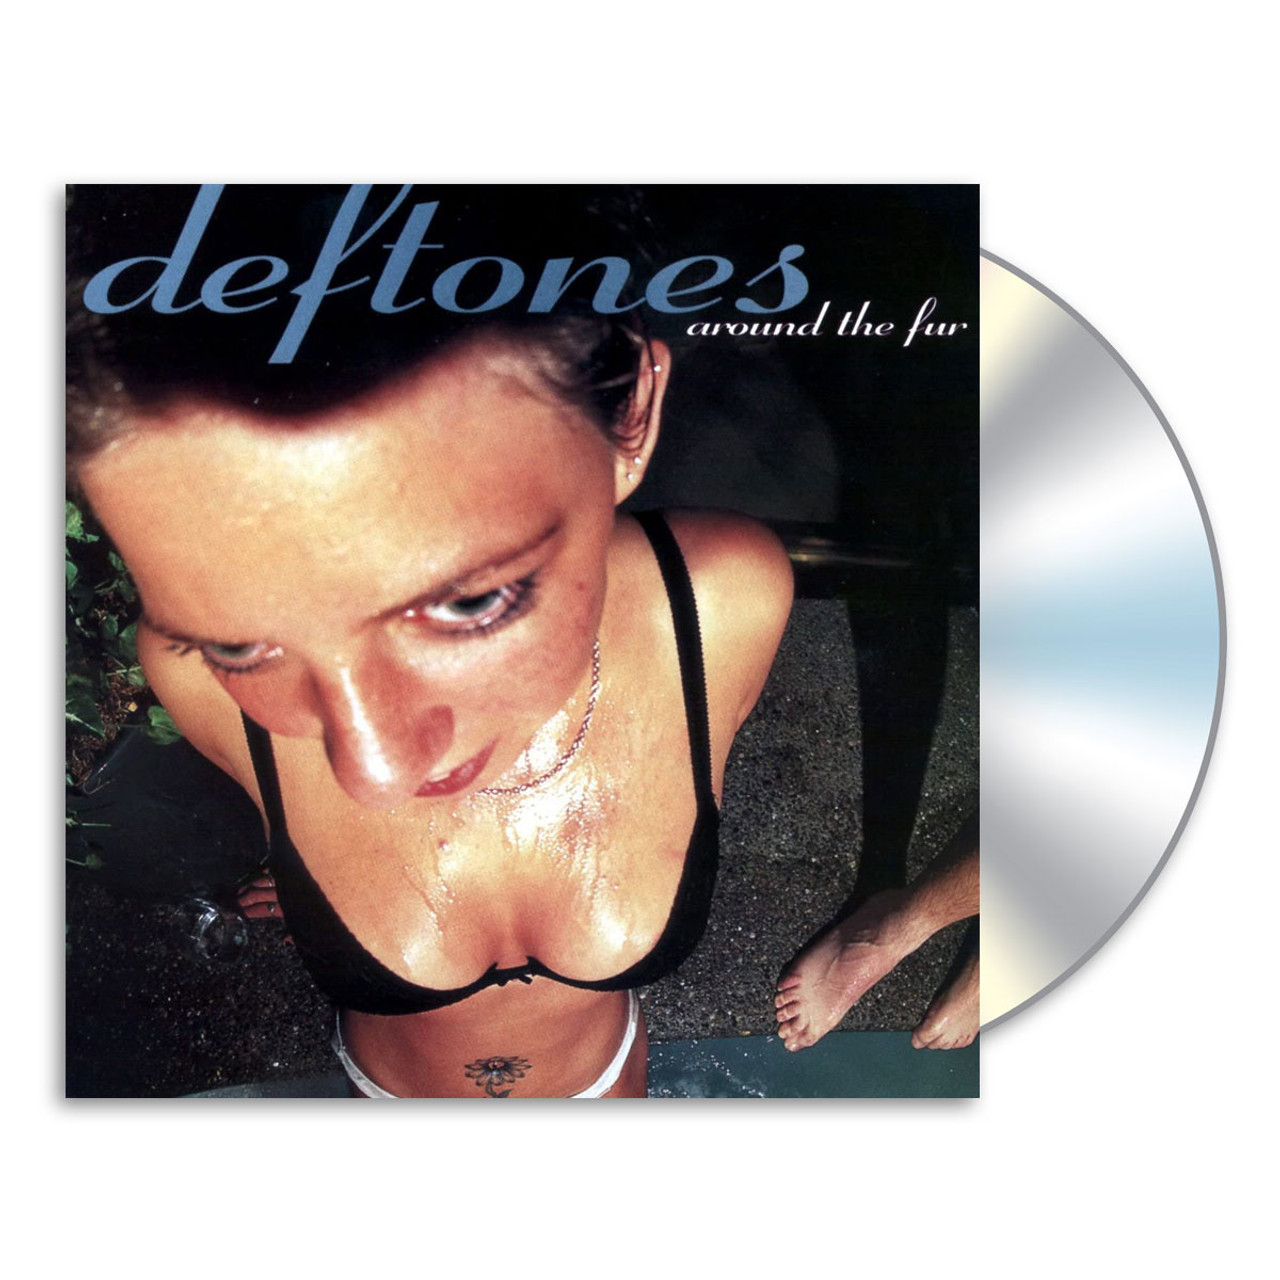 Deftones 'Around The Fur' CD Jewel Case